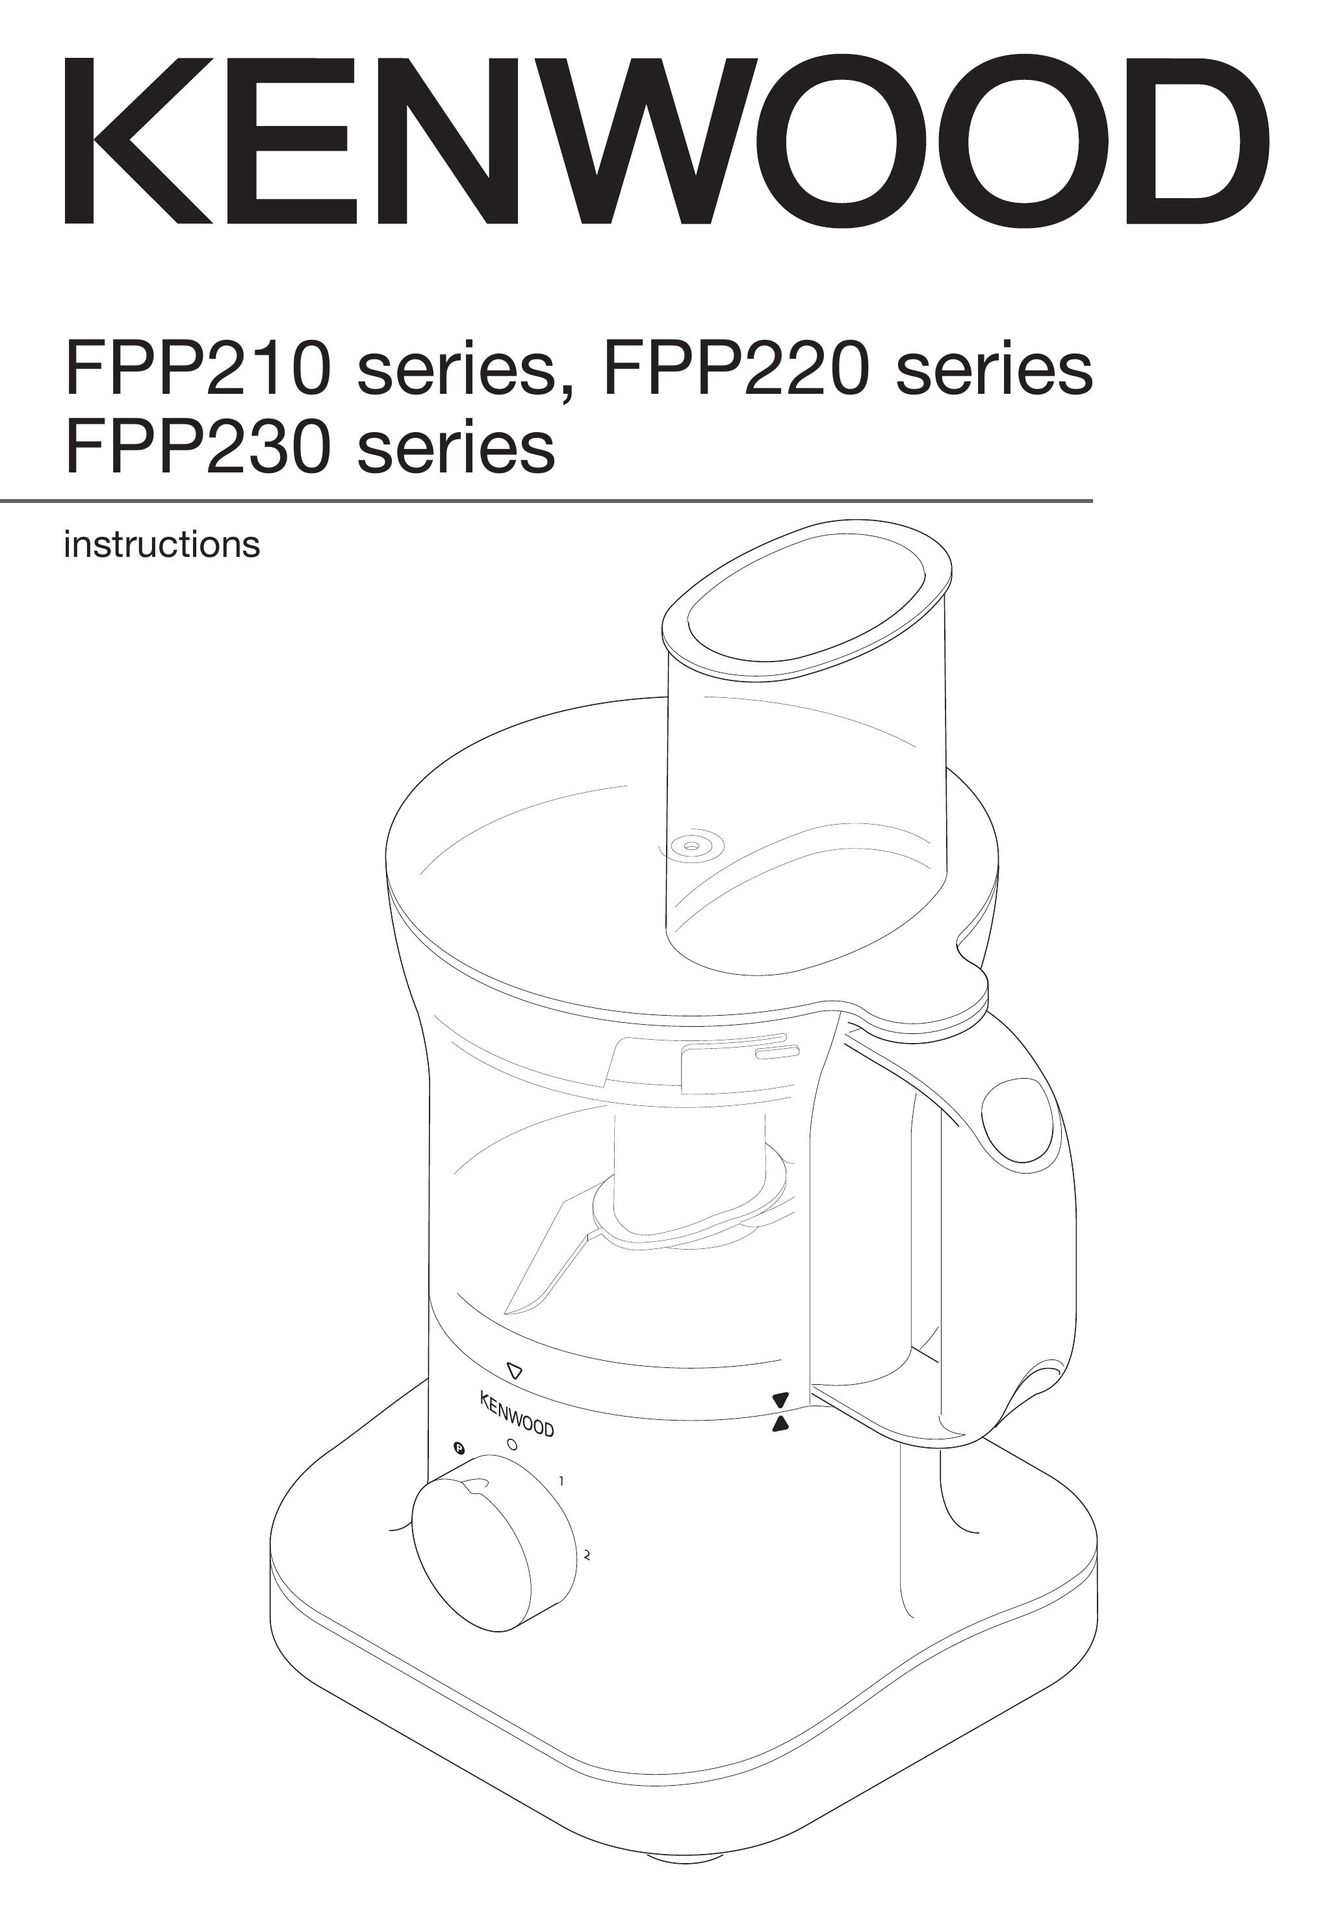 Kenwood FPP210 series Food Processor User Manual